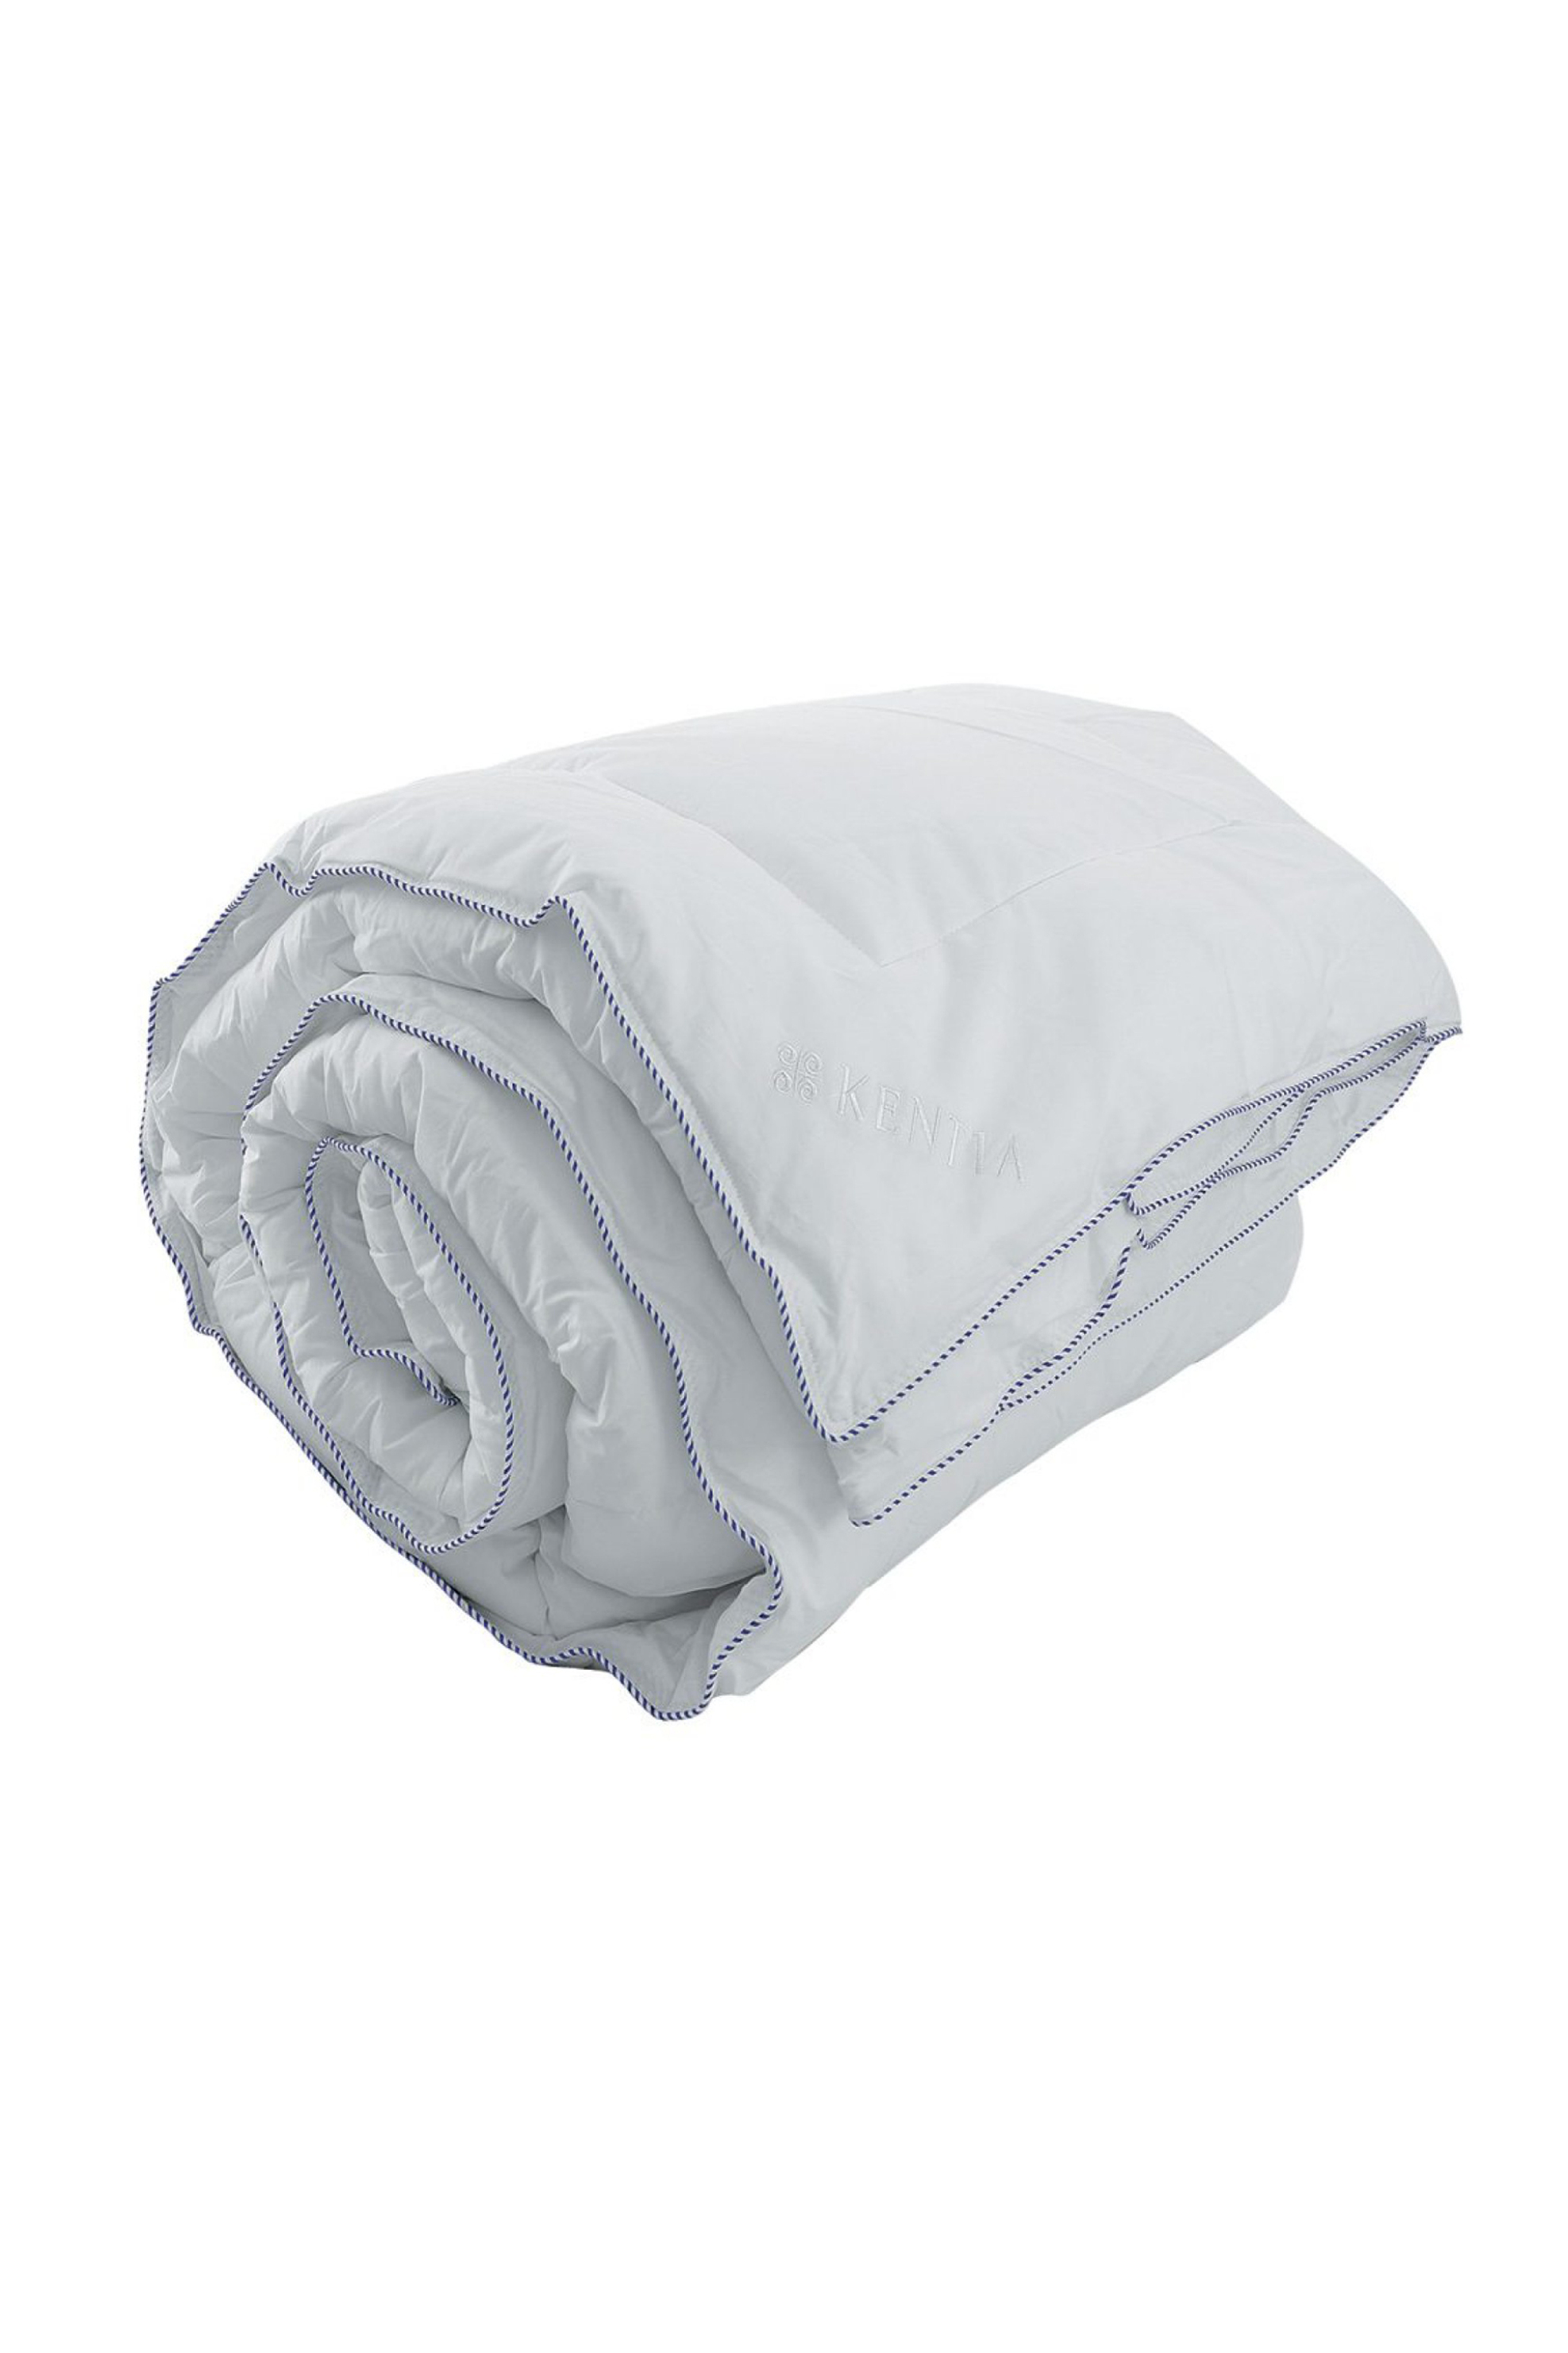 Kentia πάπλωμα υπέρδιπλο 3D Hollowfiber "Dream Quilt" 220 x 240 cm - 000025190 200890800290